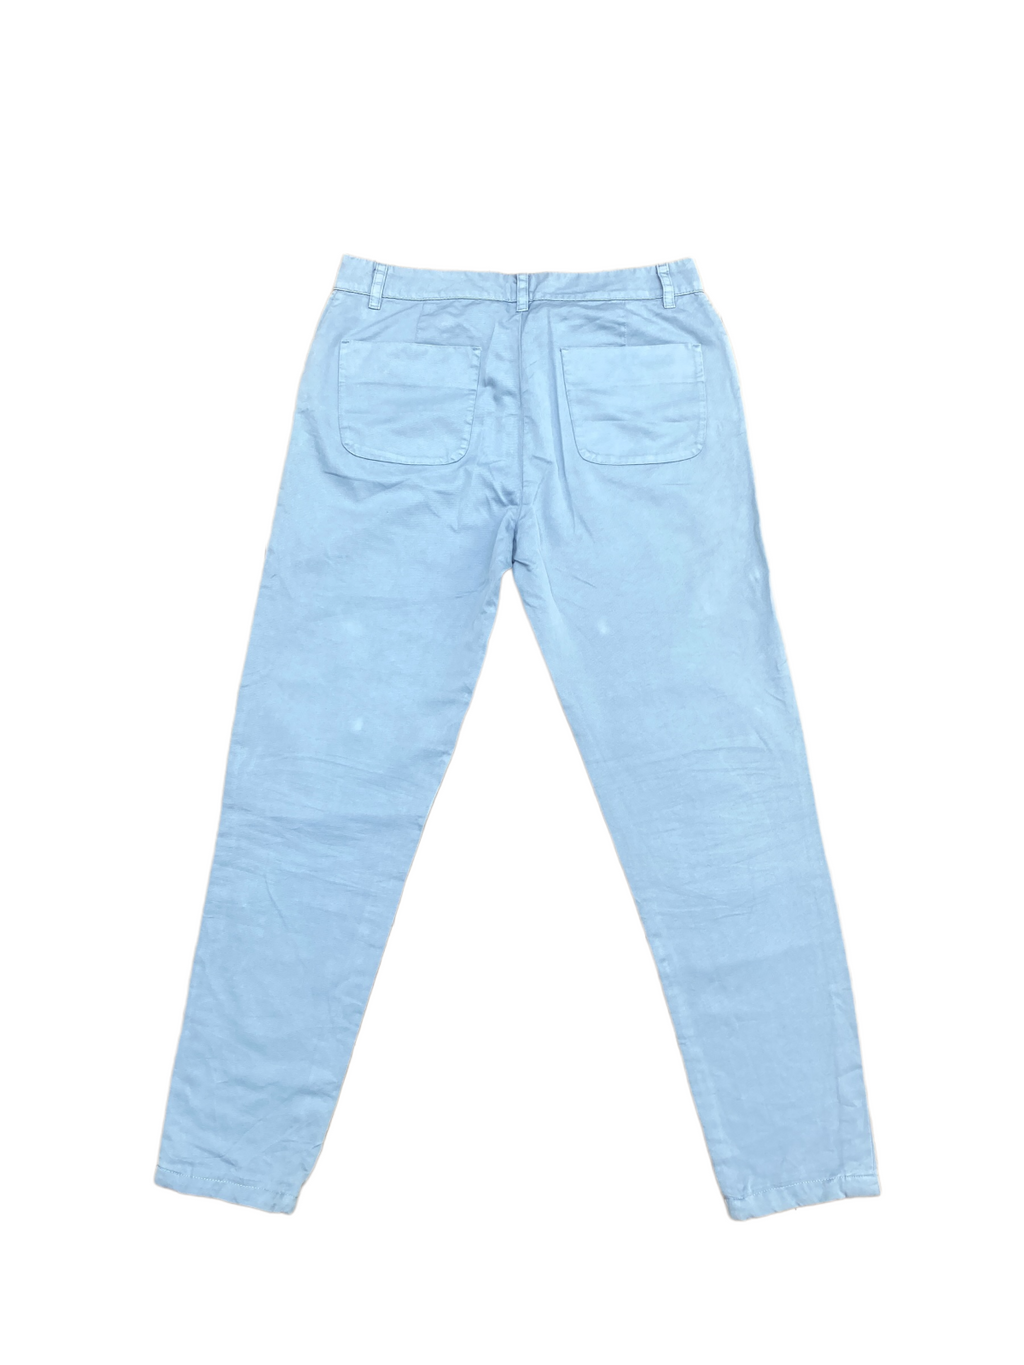 SS 2007 Blue Pants